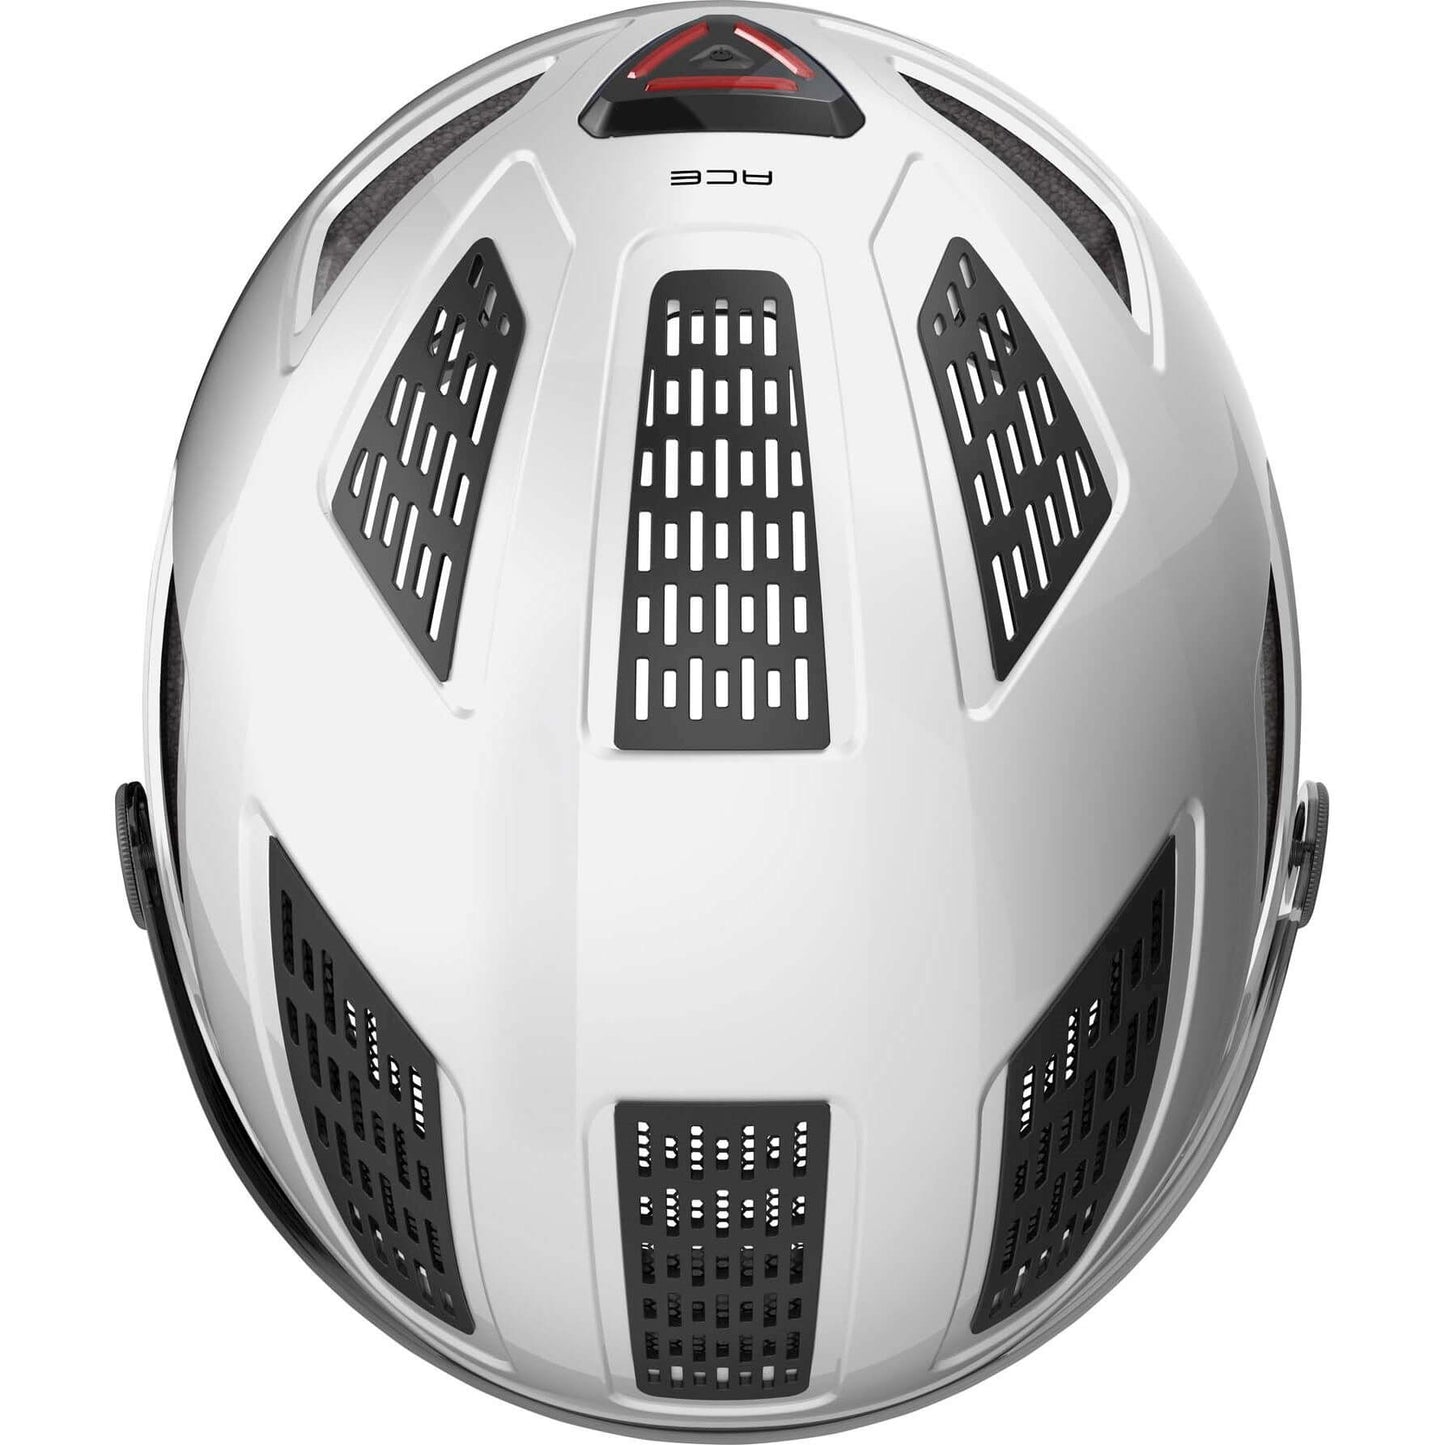 Abus Helmet Hyban 2.0 Ace Polar White L 56-61 cm